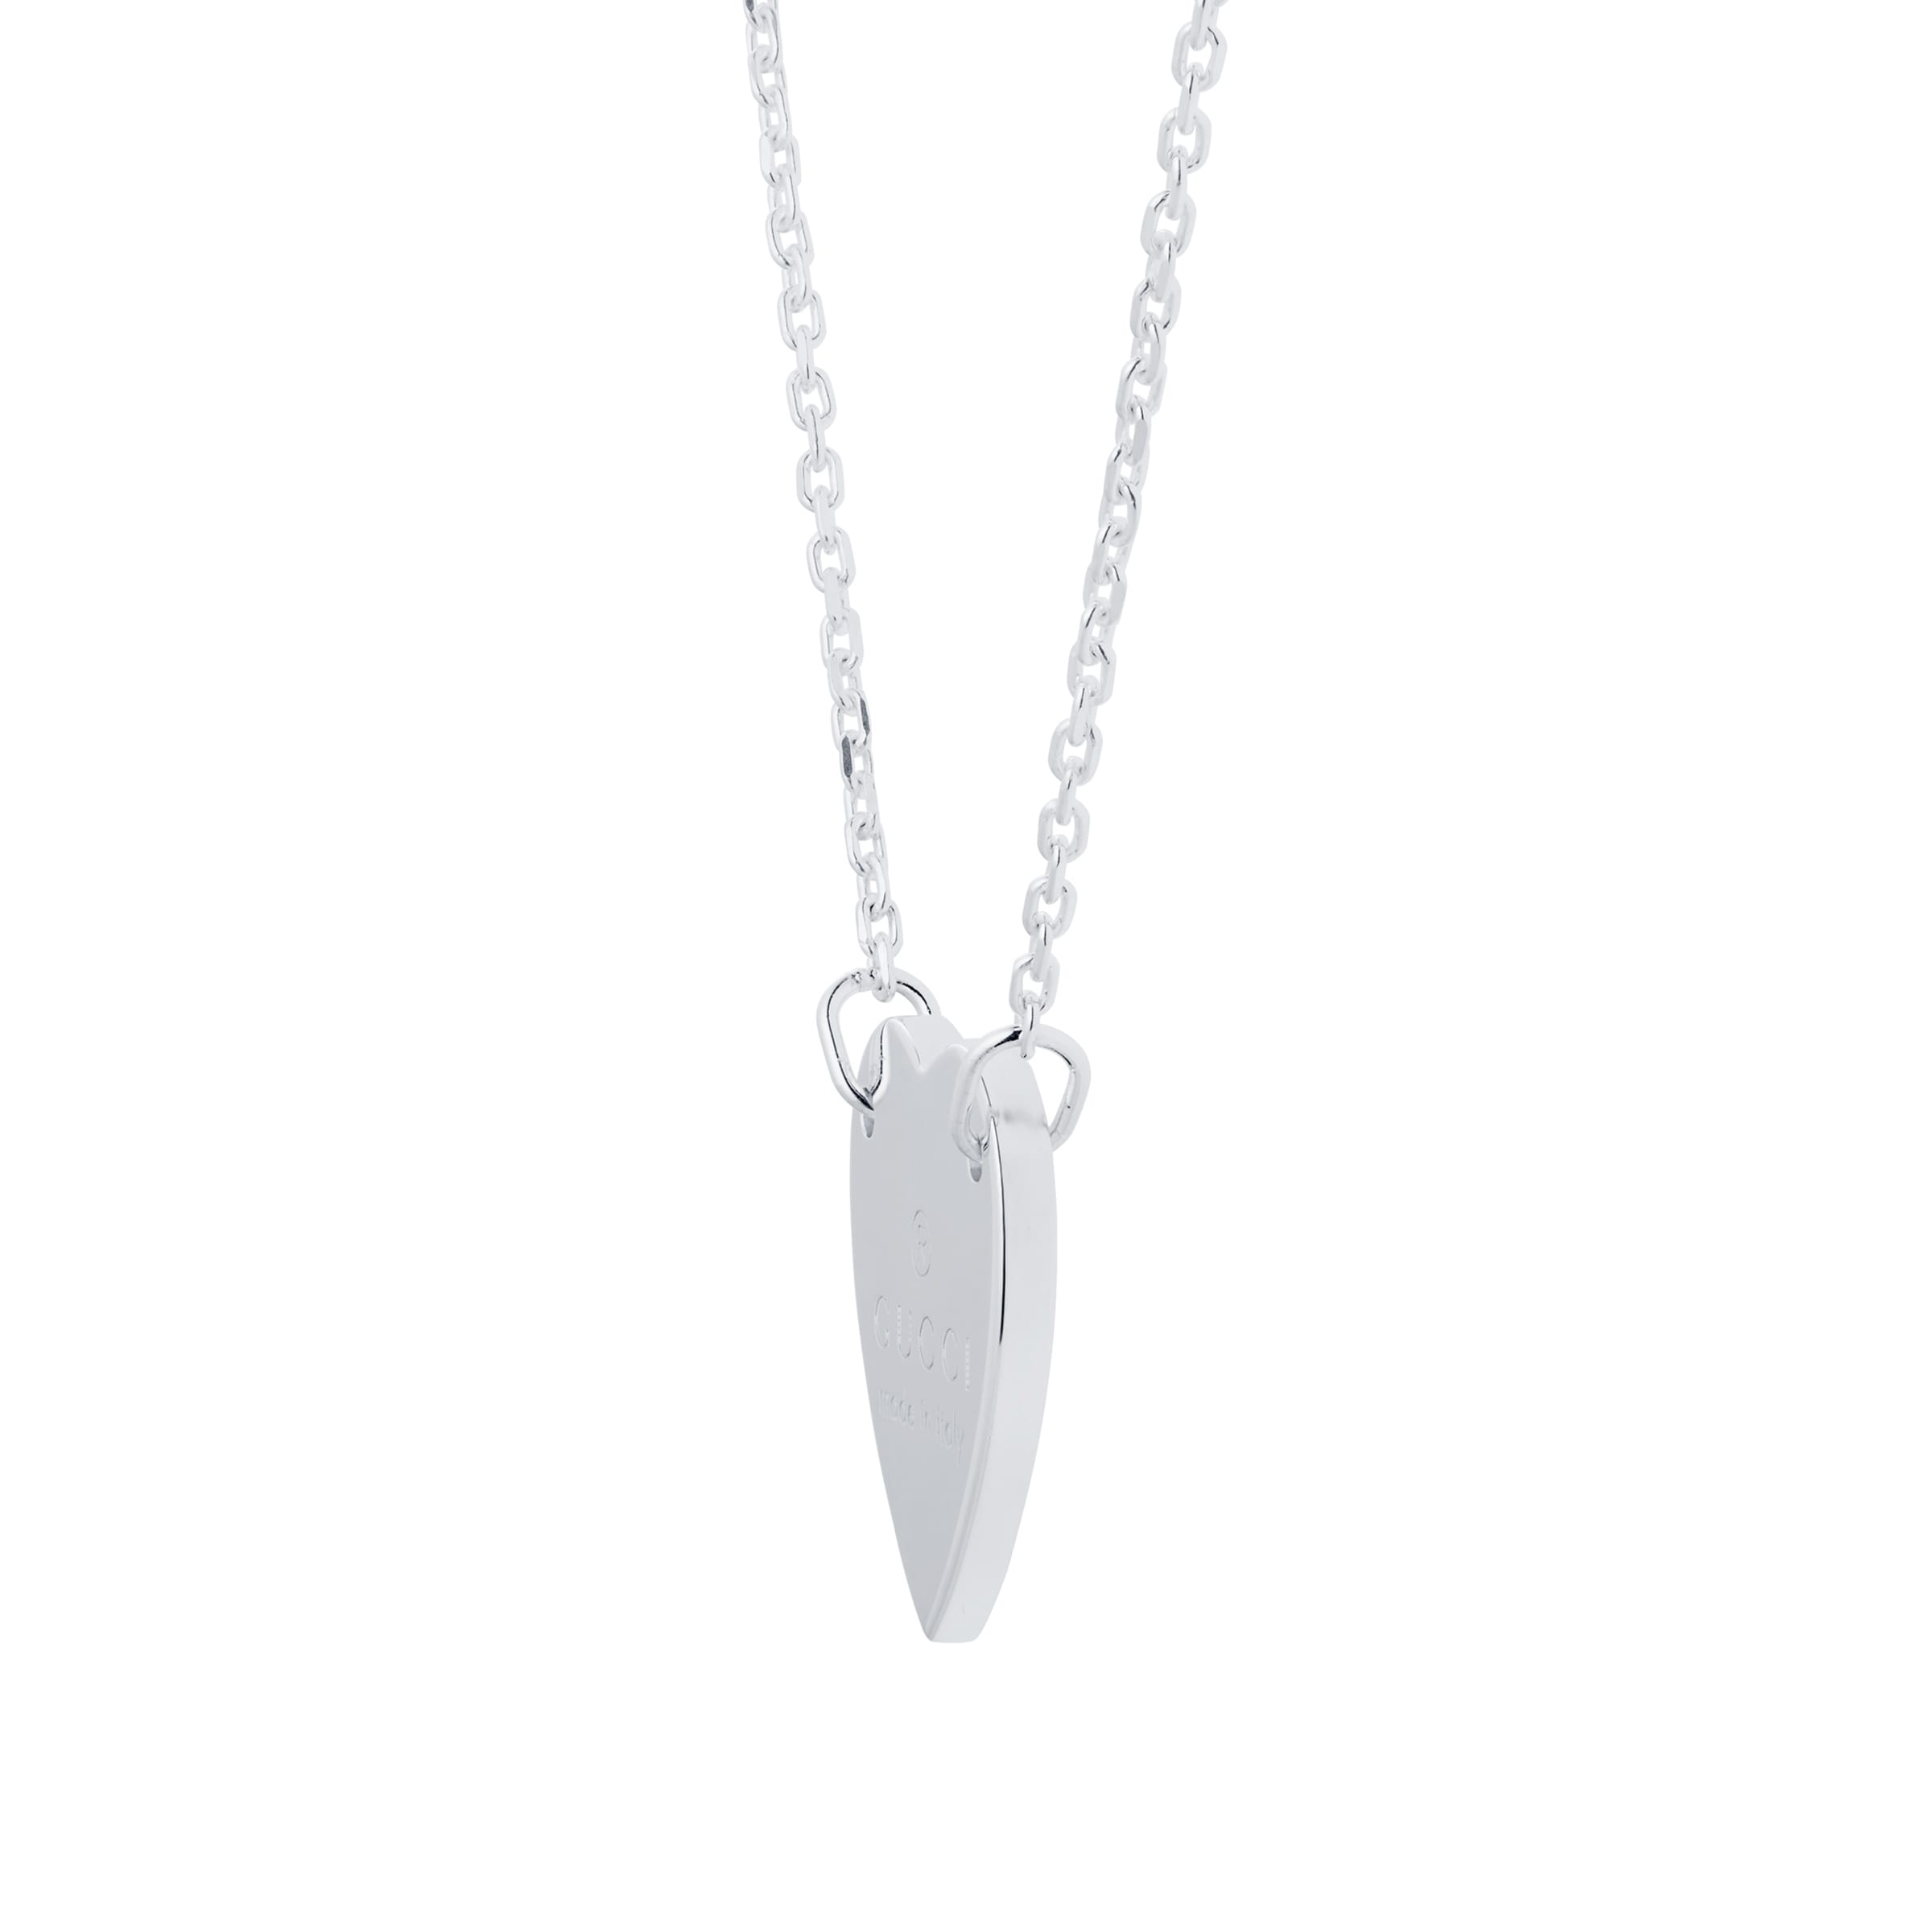 Lot 263 - A Gucci sterling silver heart pendant